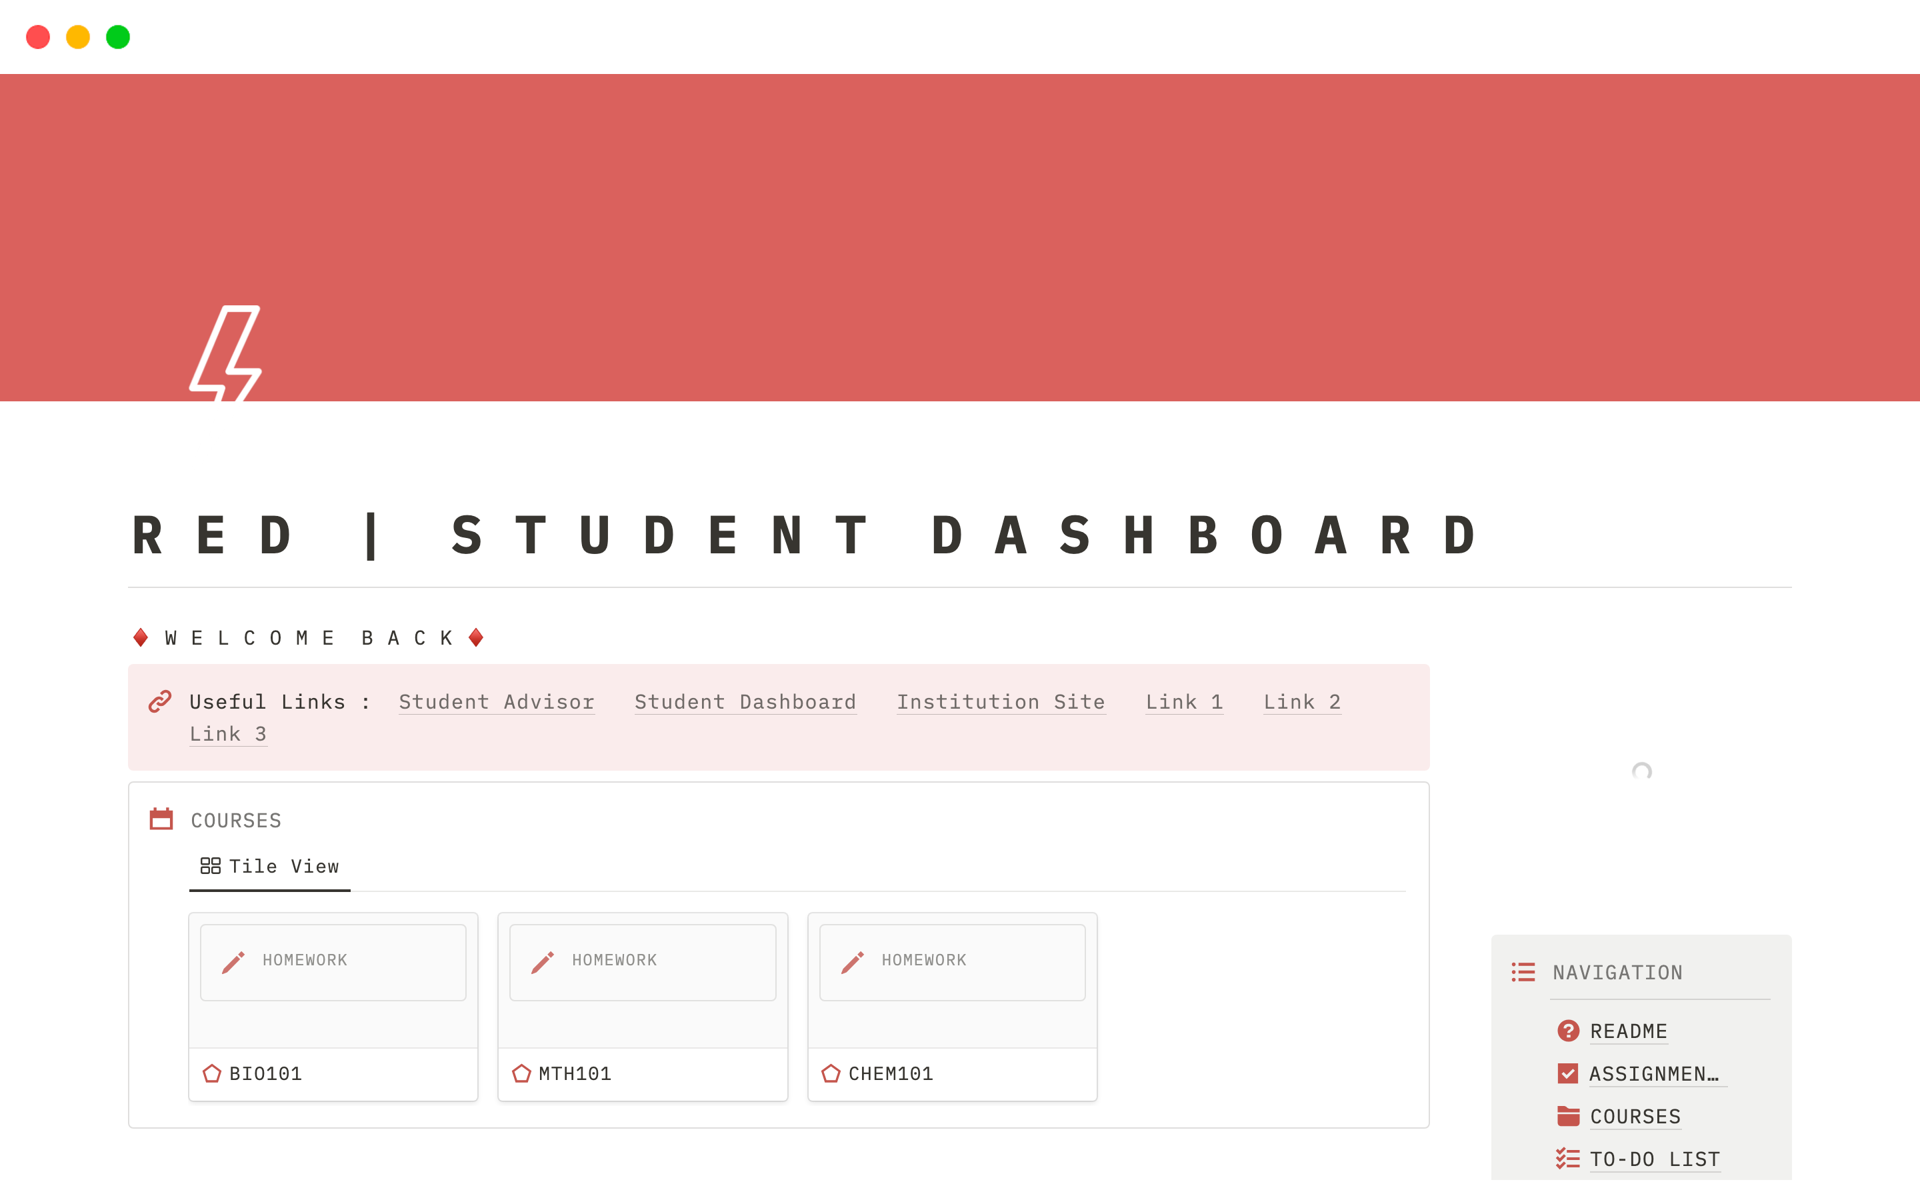 Vista previa de una plantilla para Student Dashboard